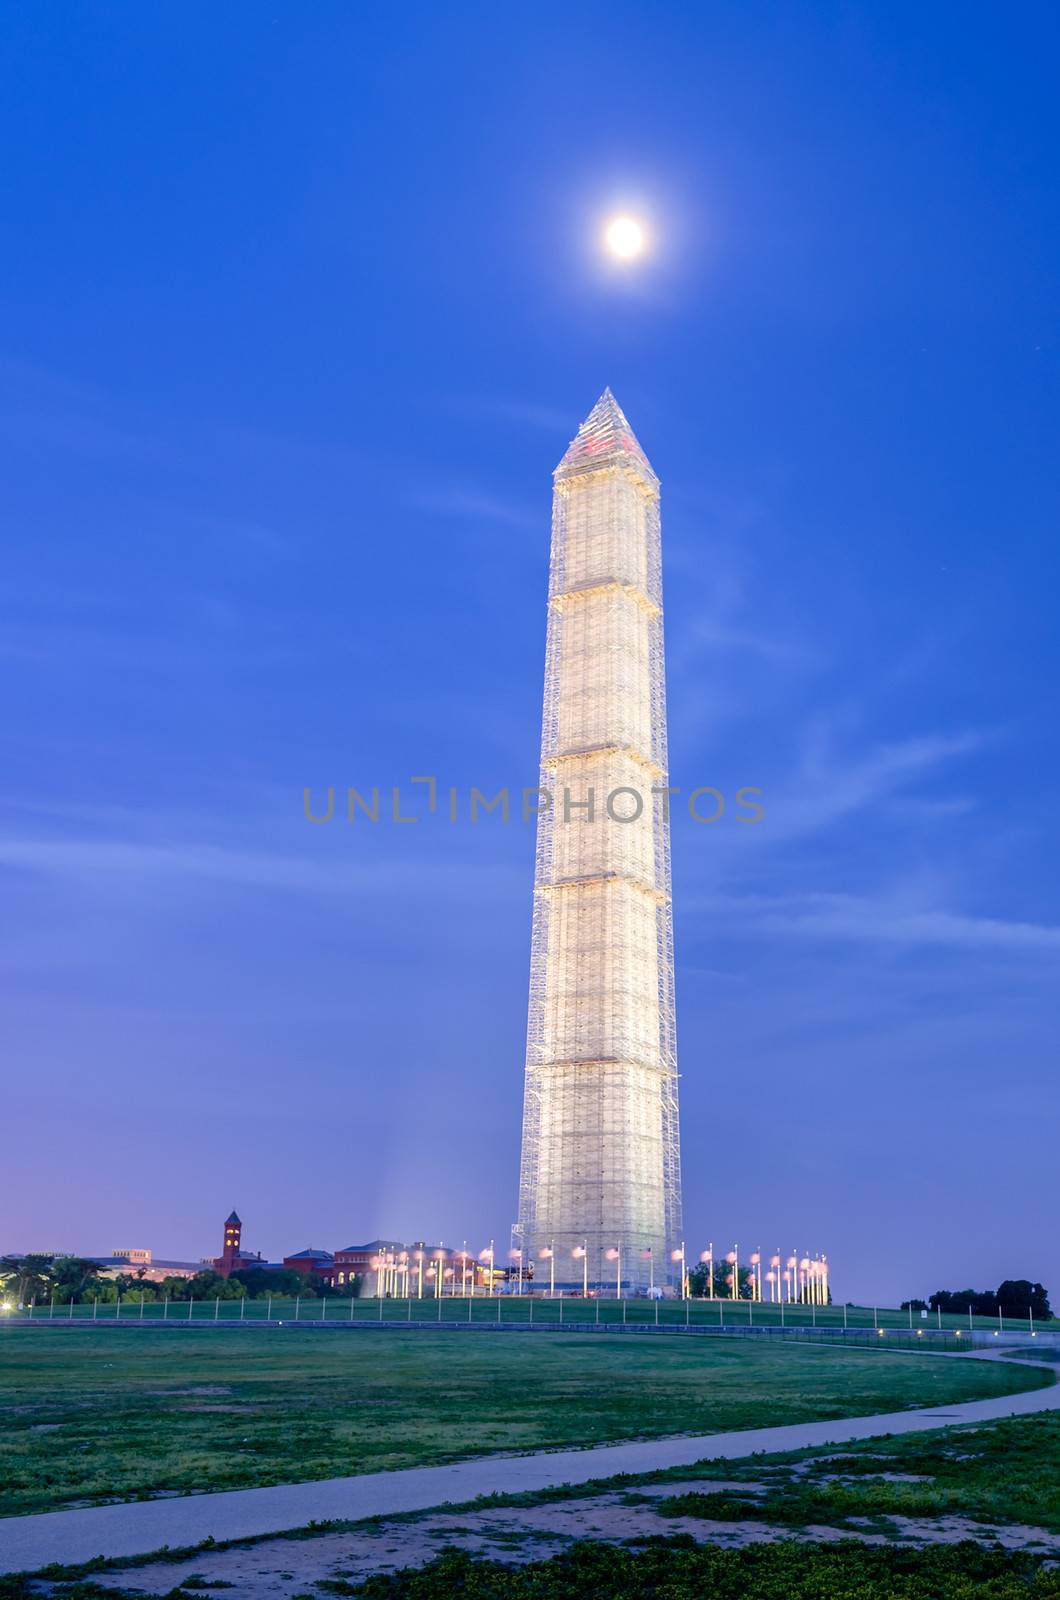 The Washington Memorial in Washington DC at Night by marcorubino